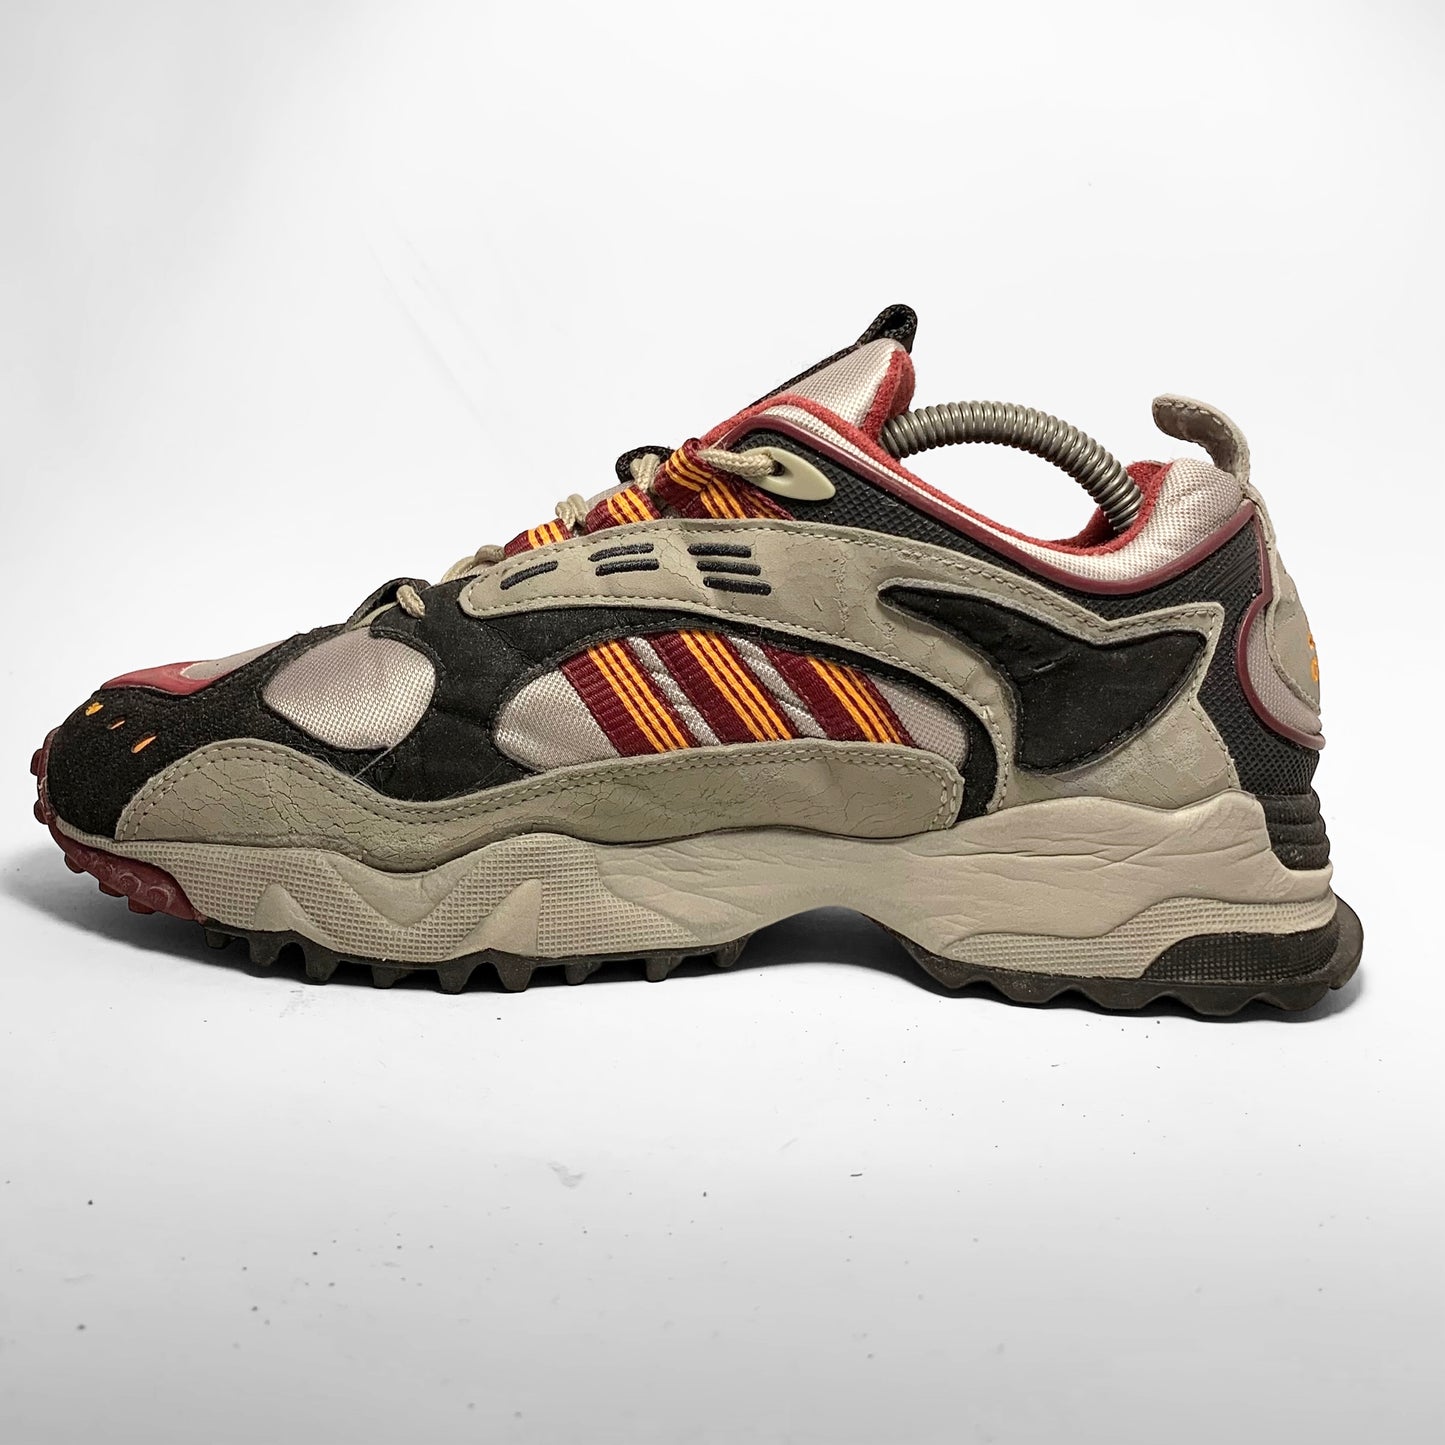 Adidas Response TR (1995)